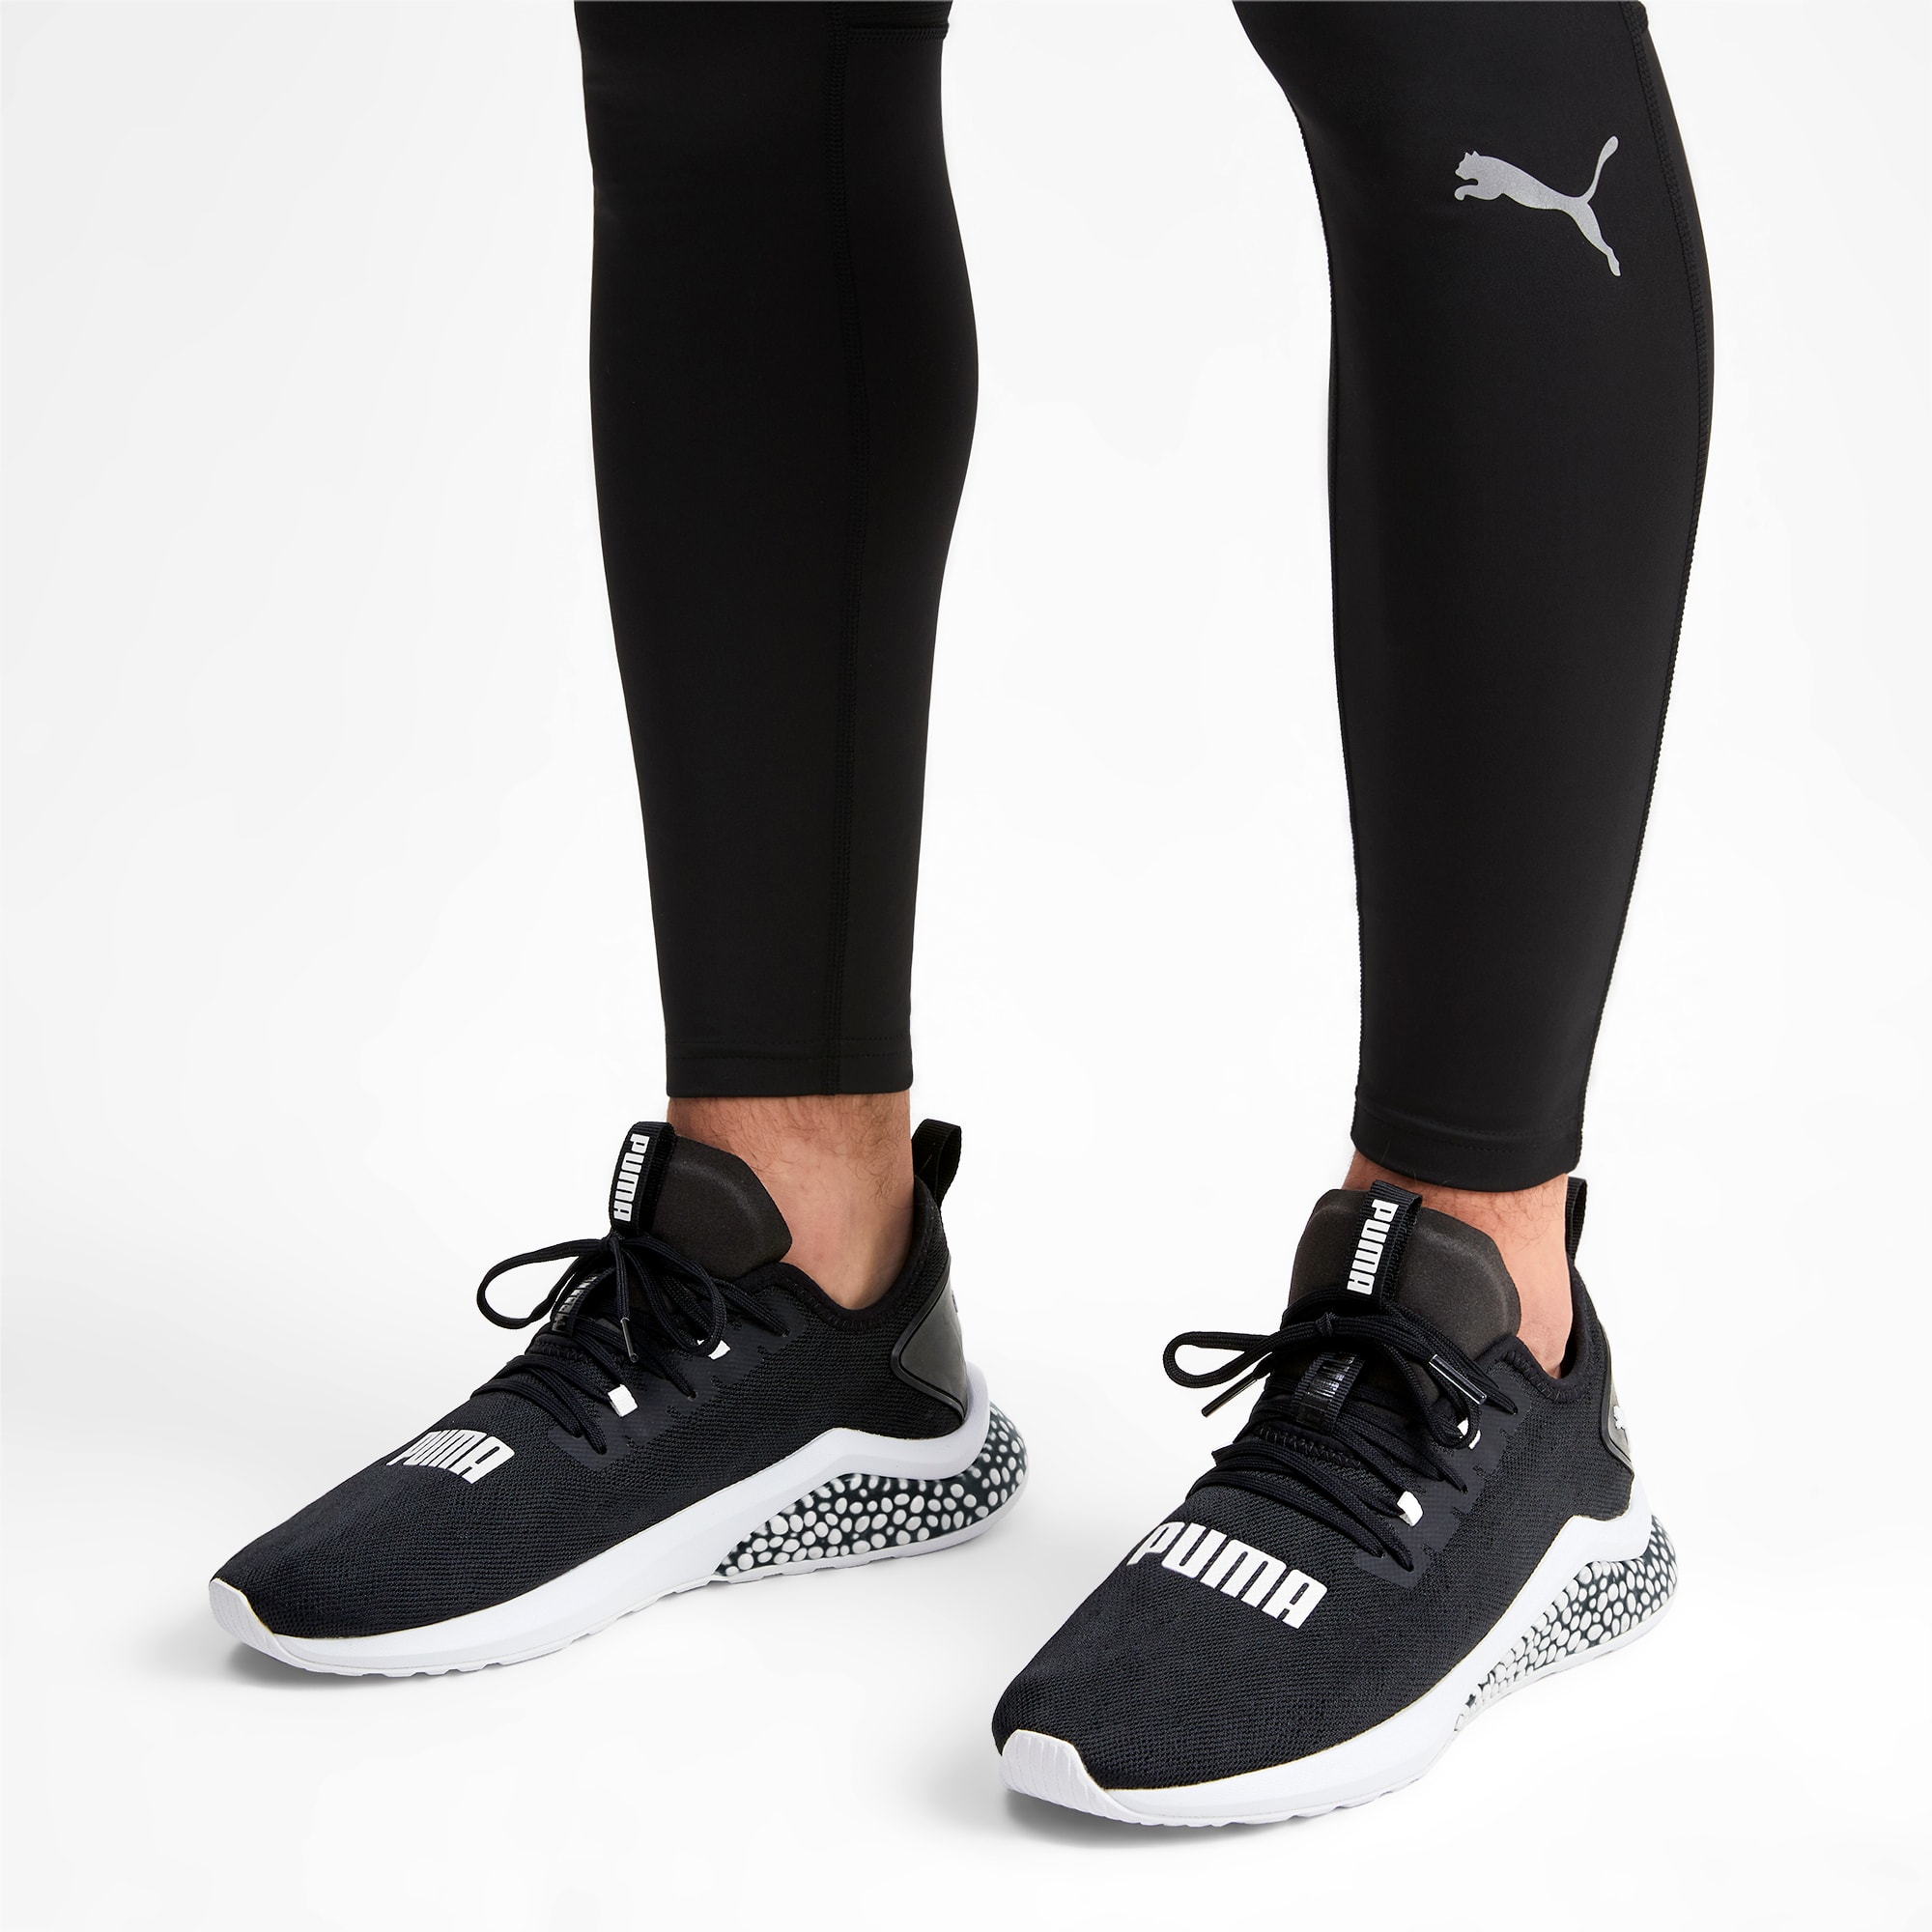 Hybrid NX Camo Men's Running Sneakers 